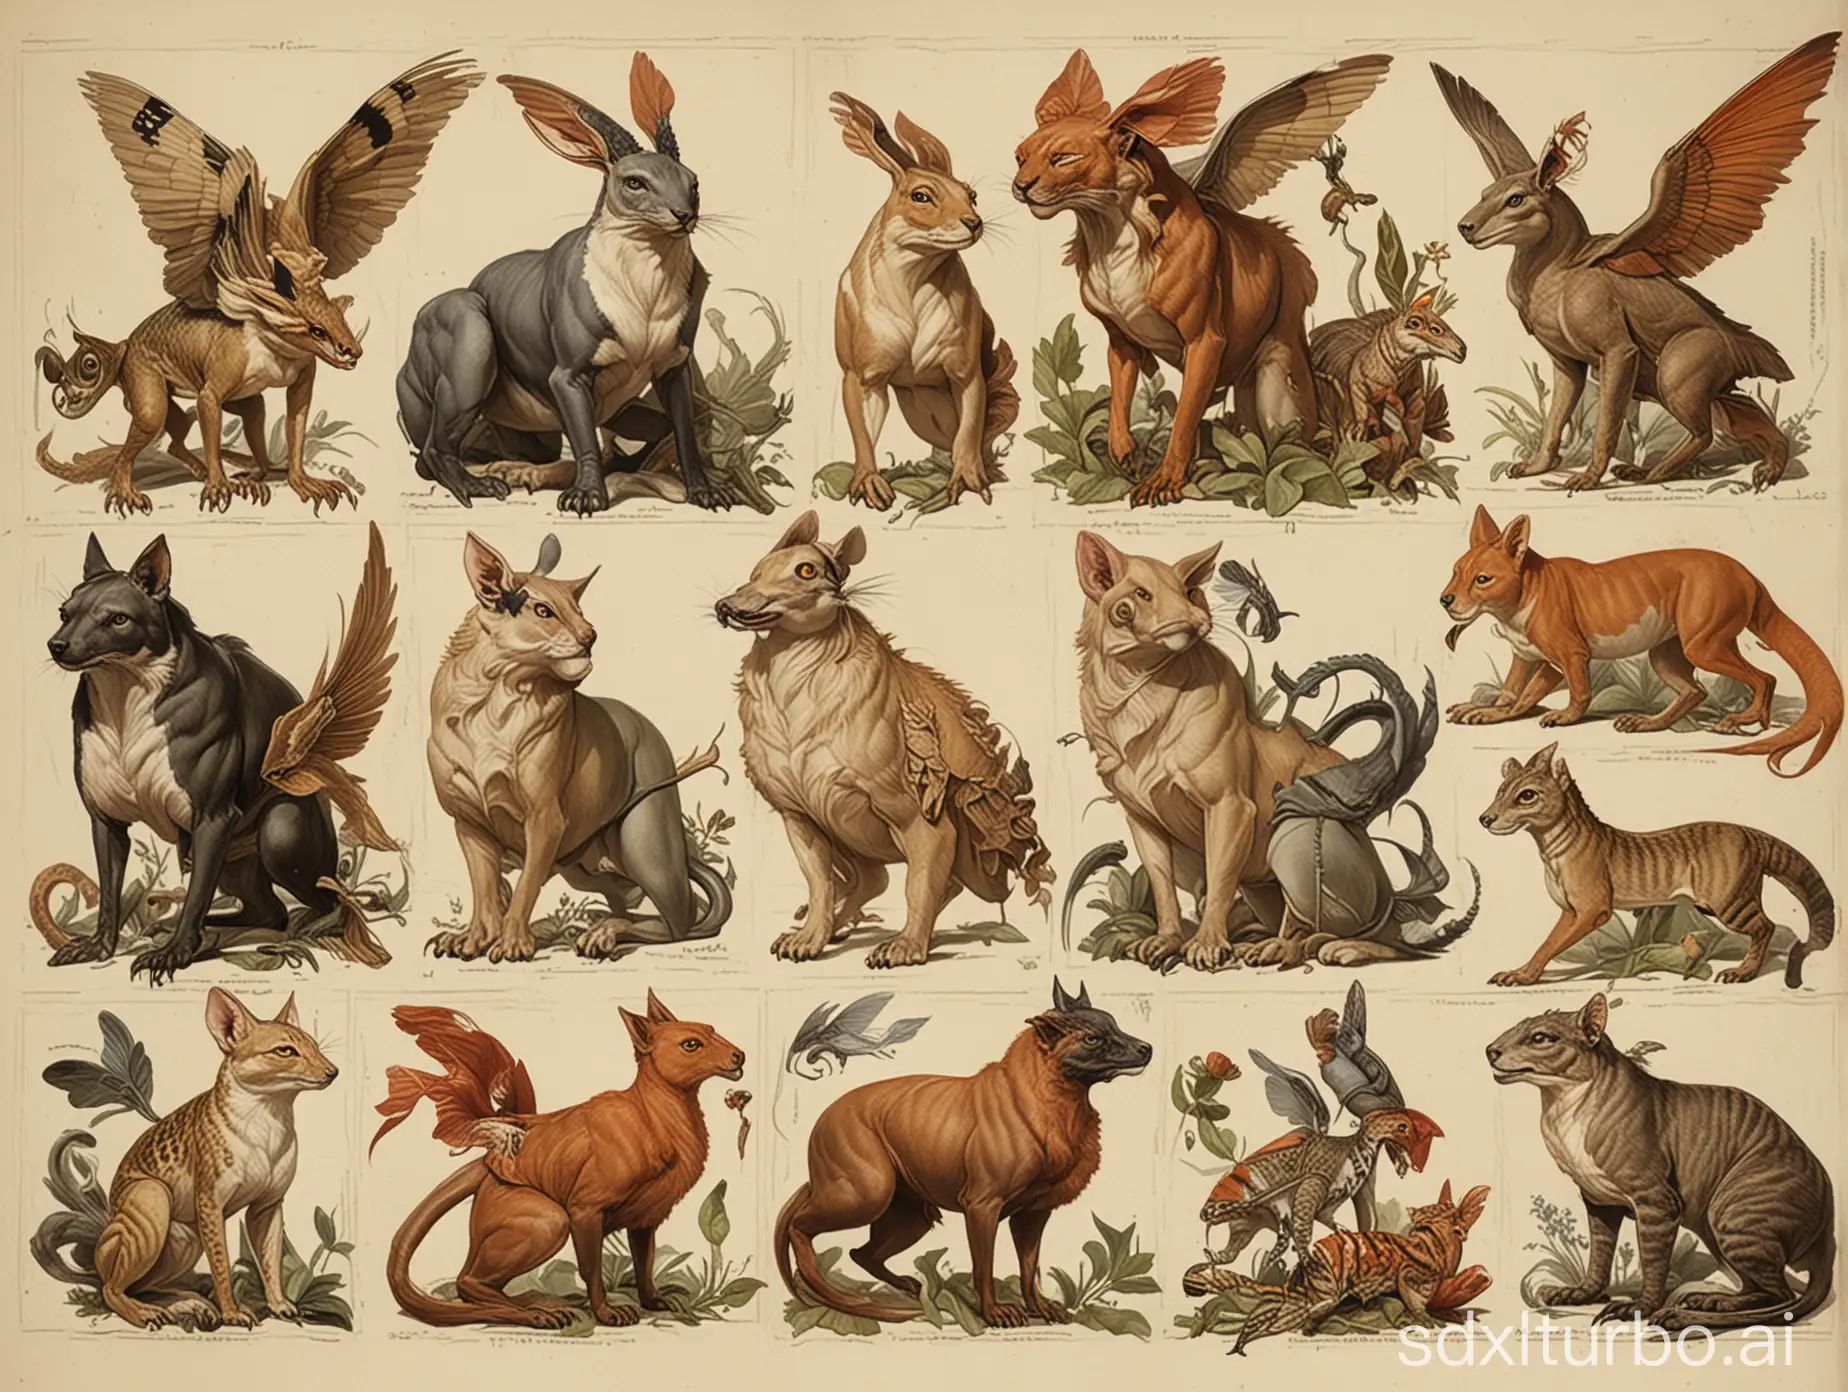 natural history illustration of various fantasy animal hybrids in Leyendecker illustration style